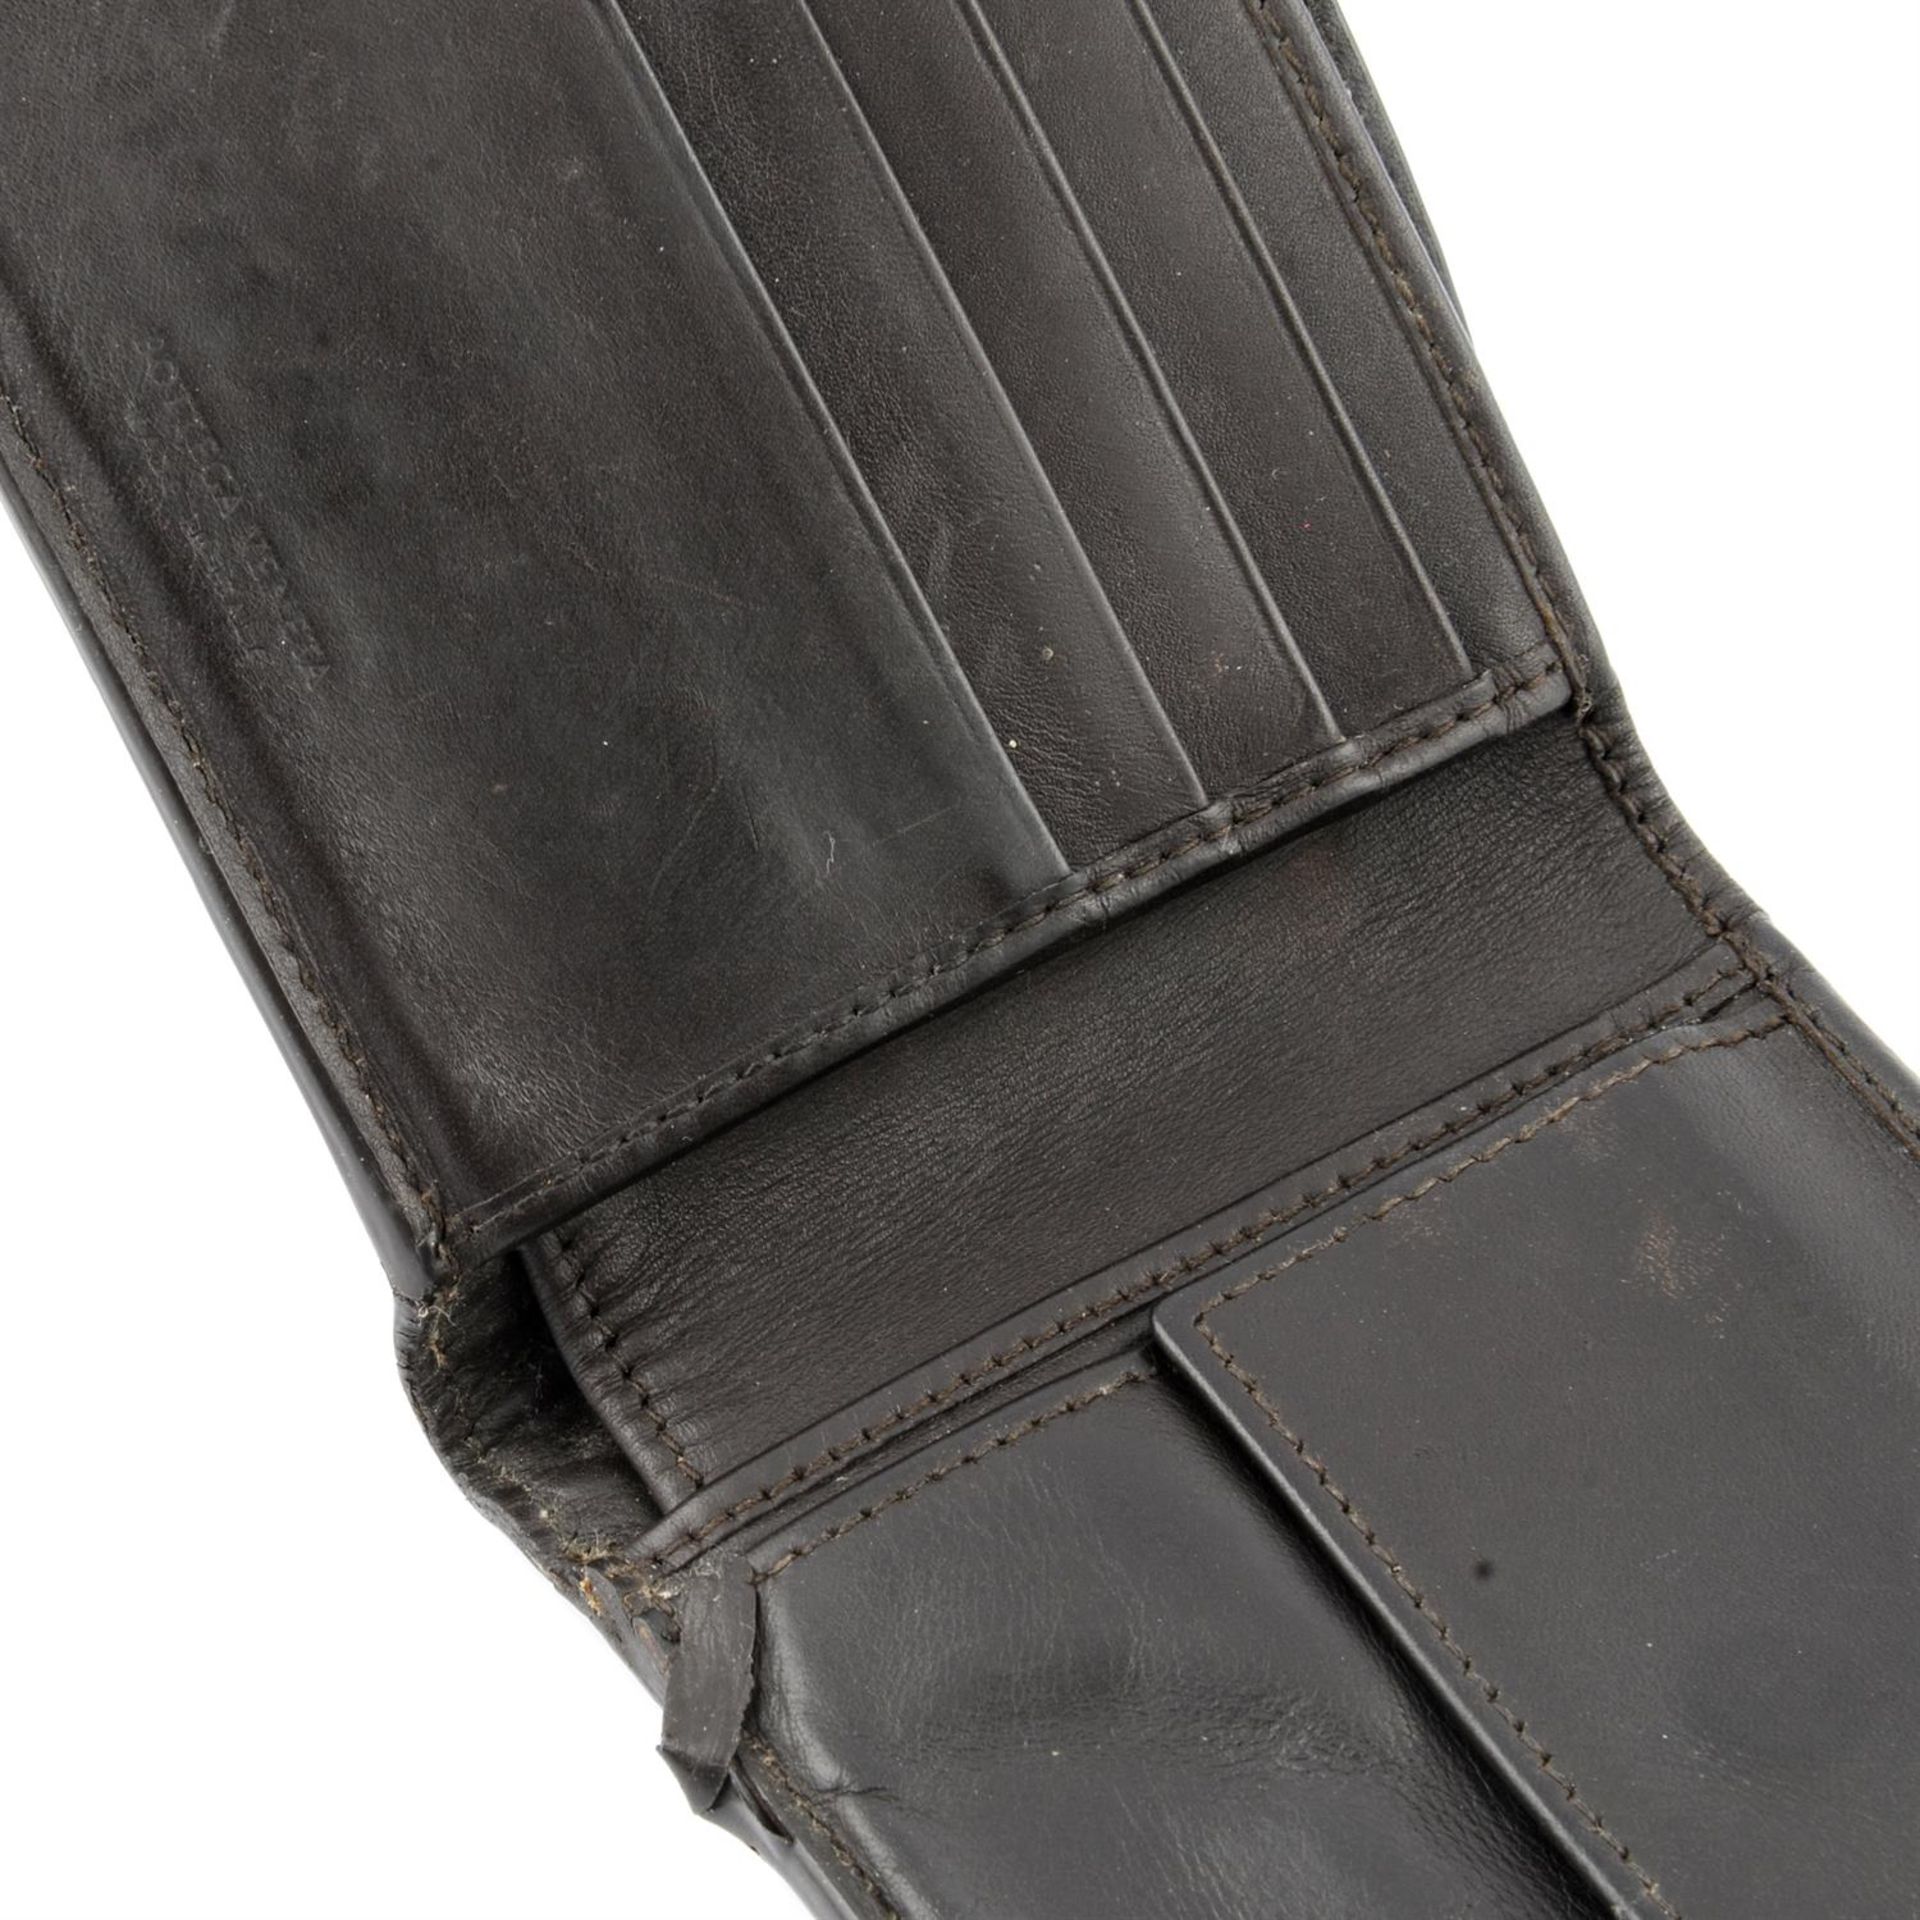 BOTTEGA VENETA - a Intrecciato leather Bifold wallet. - Bild 3 aus 4